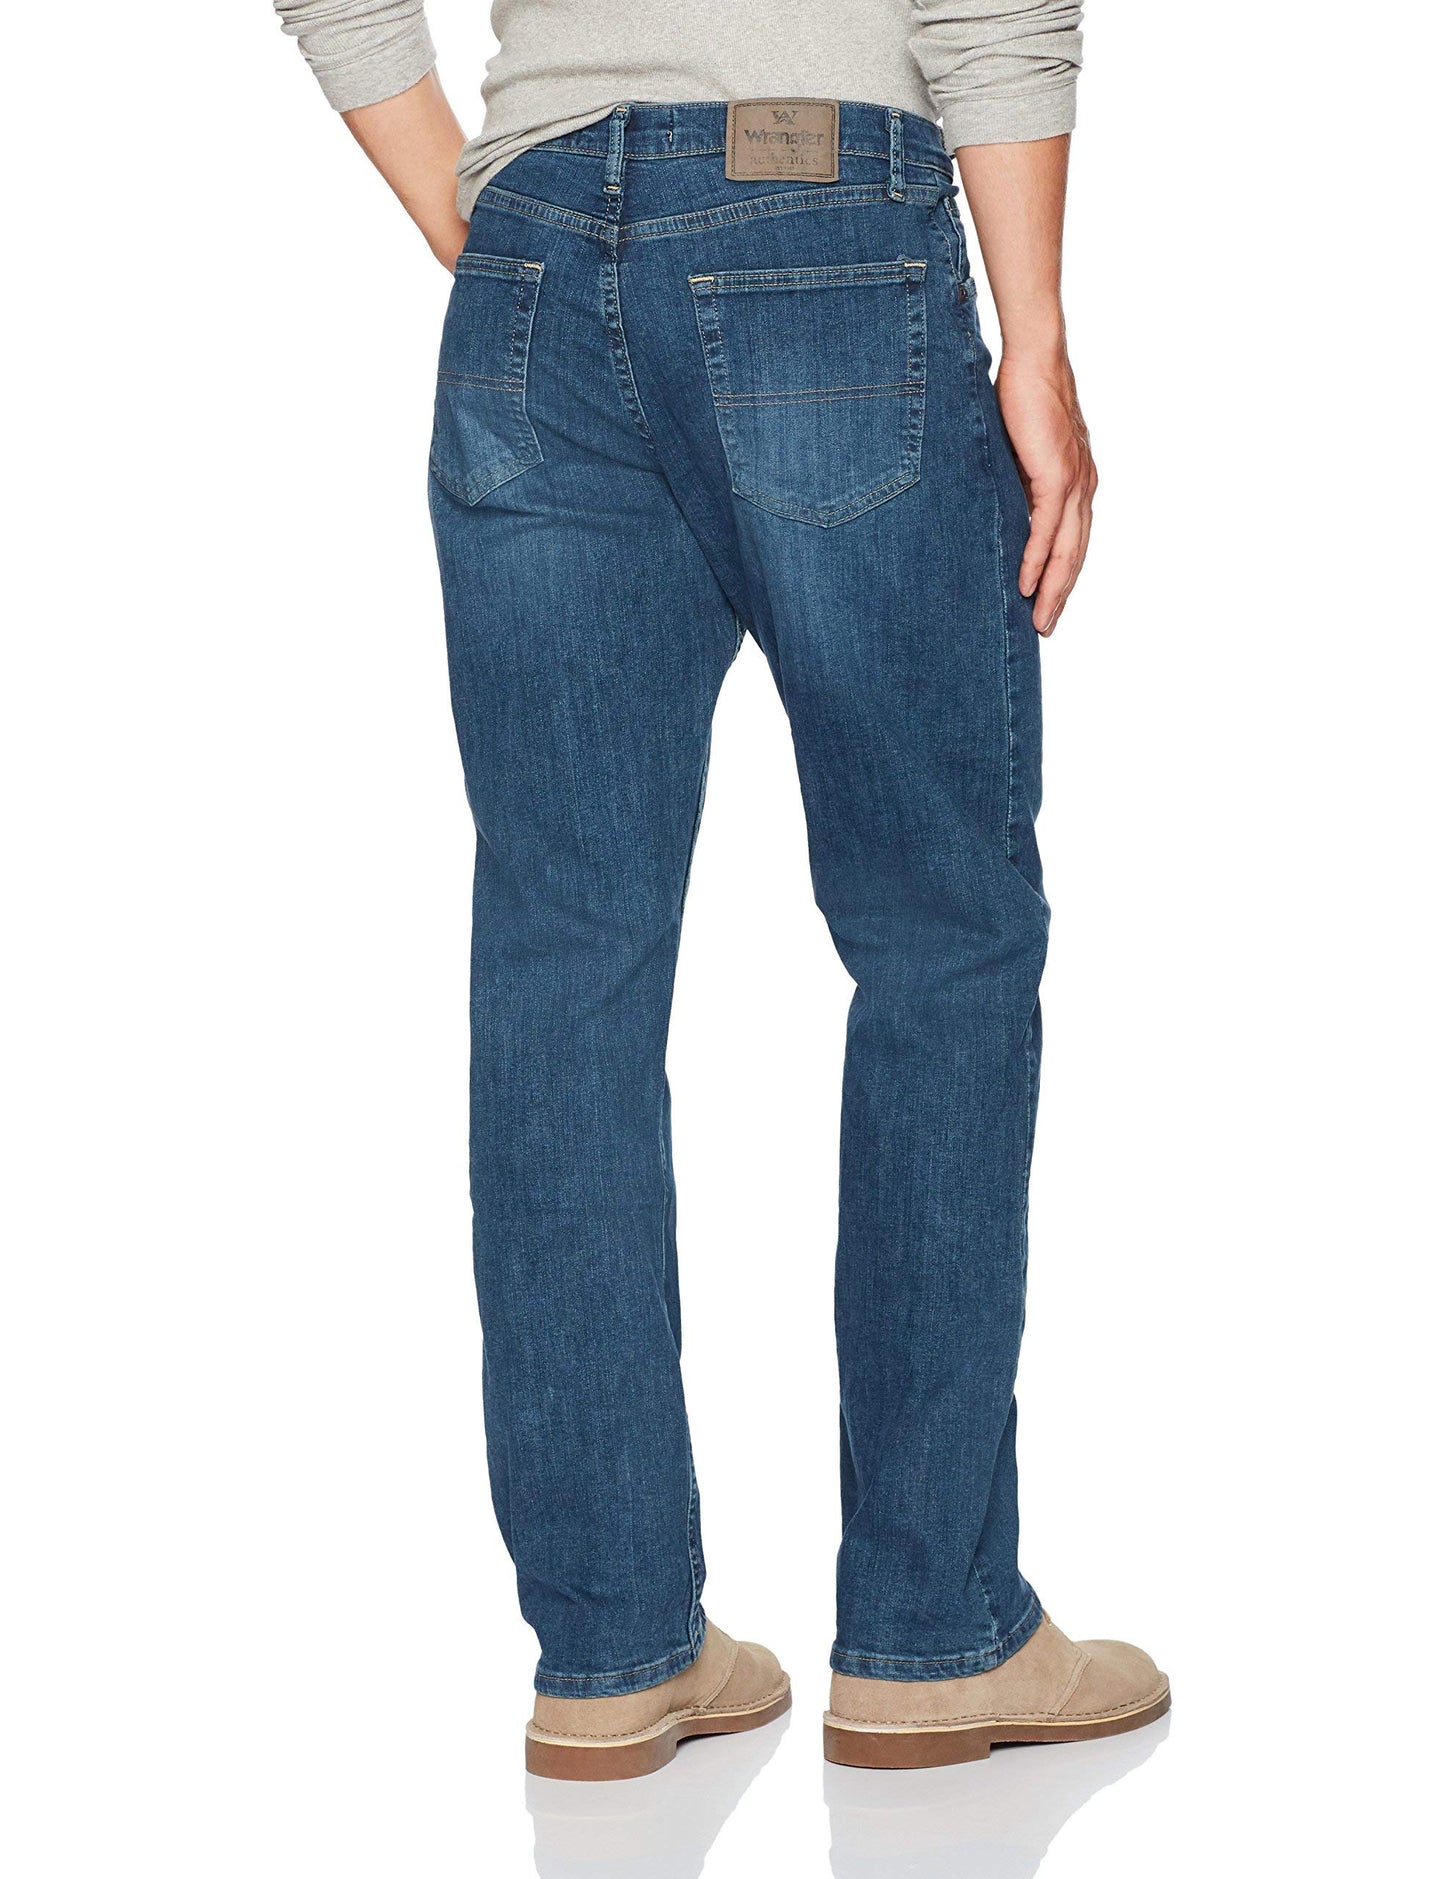 Wrangler Authentics Men's Classic 5-Pocket Relaxed Fit Jean, Slate Flex, 35W x 30L